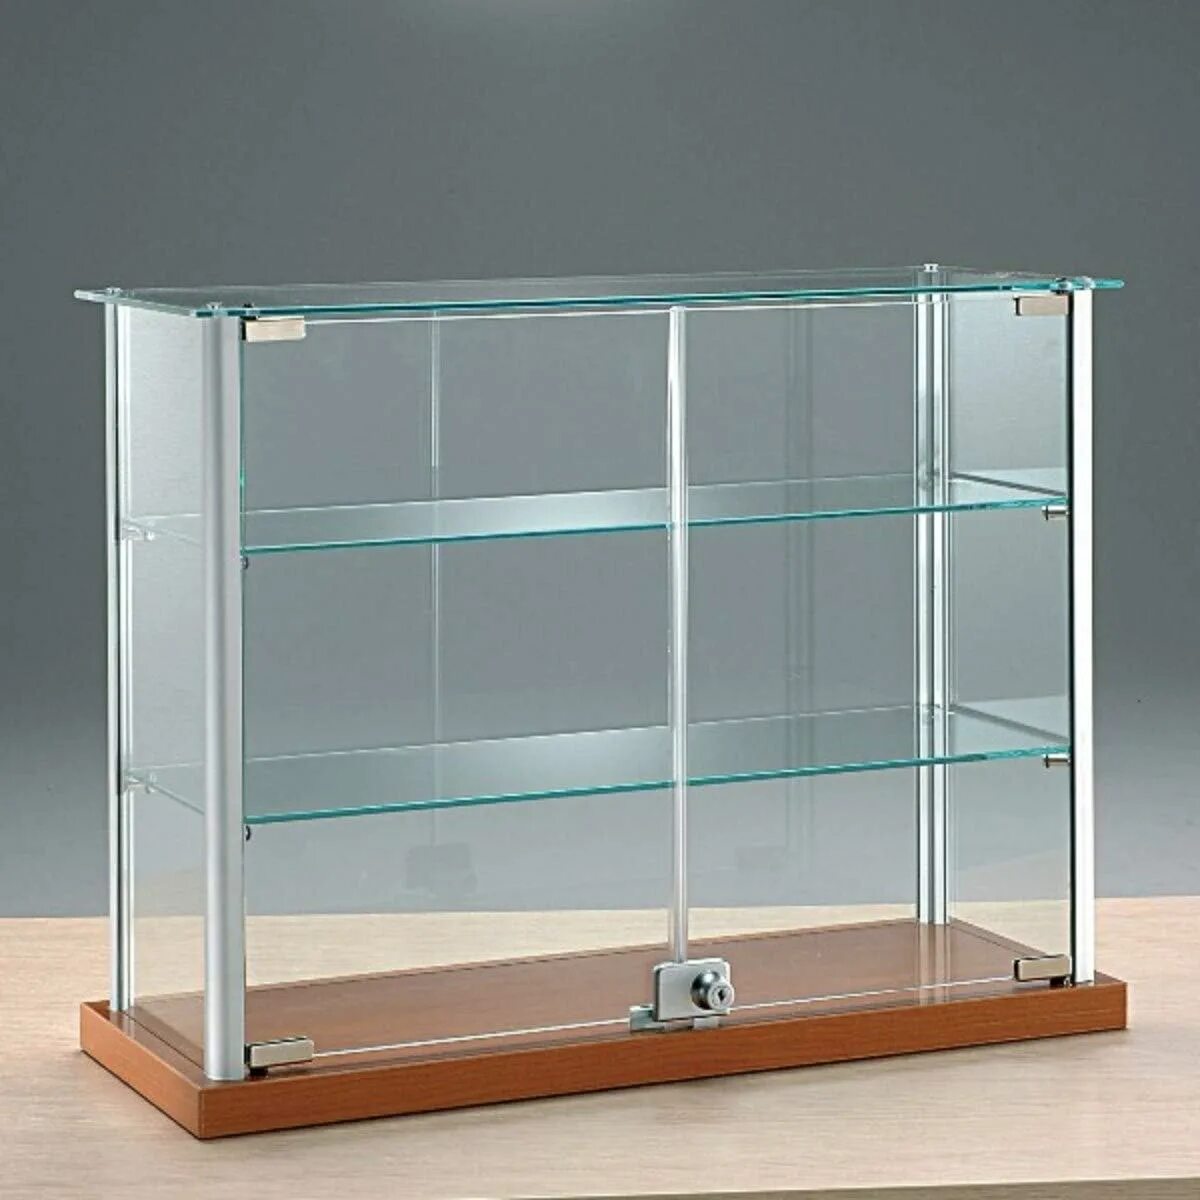 Витрина Glass Showcase h 1800. Витрина стеклянная 50#30. Витрина стеклянная "Saphir Noir". Стеклянный витринный